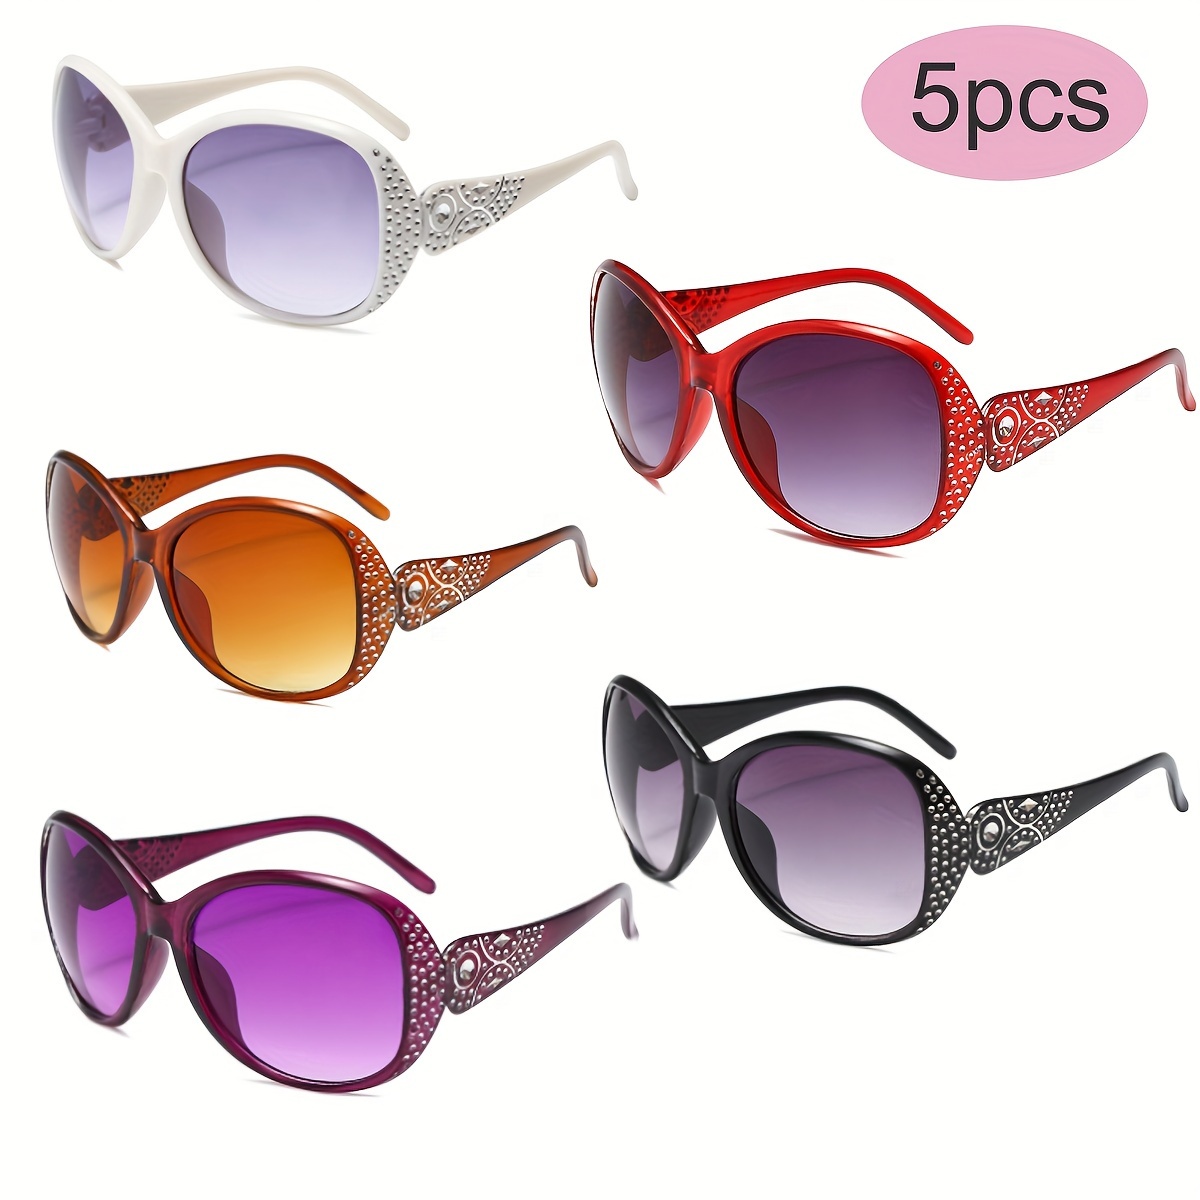 

5pcs Women Large Fashion Glasses Oversized Polarized Glasses Classic Trend Ladies Glasses